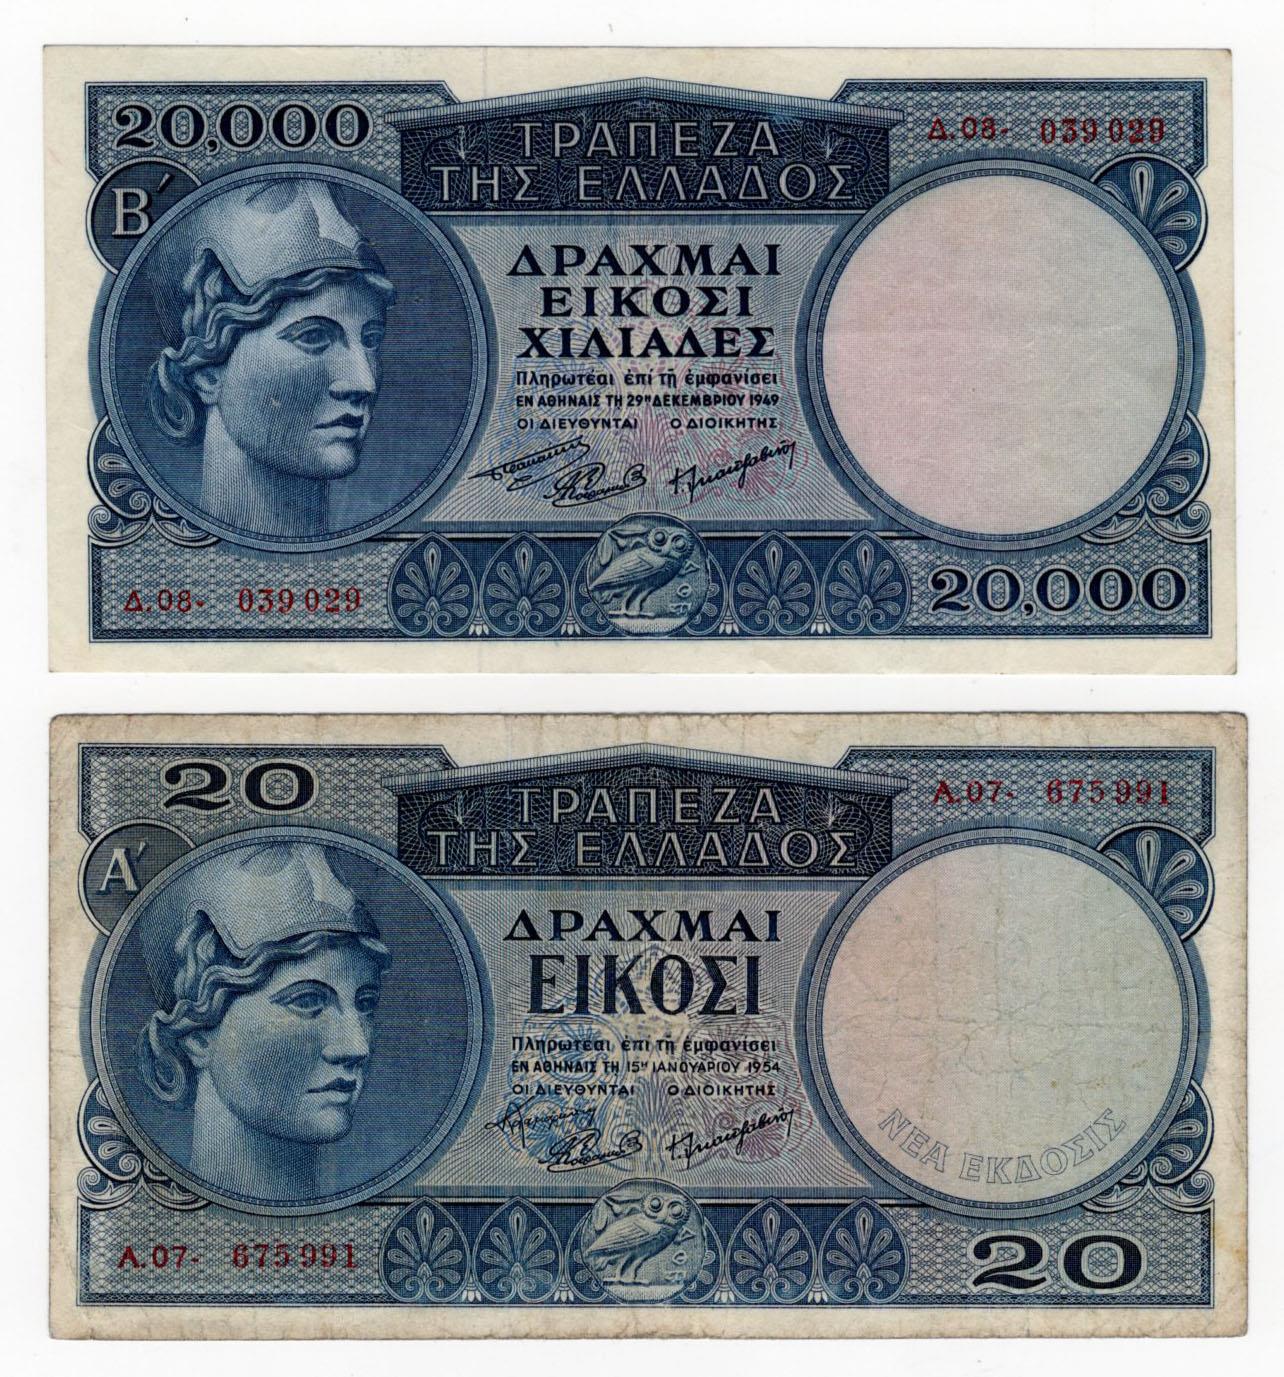 Greece (2), 20 Drachmai dated 1954 (BNB B882a, Pick187) Fine, 20000 Drachmai dated 1949 (BNB